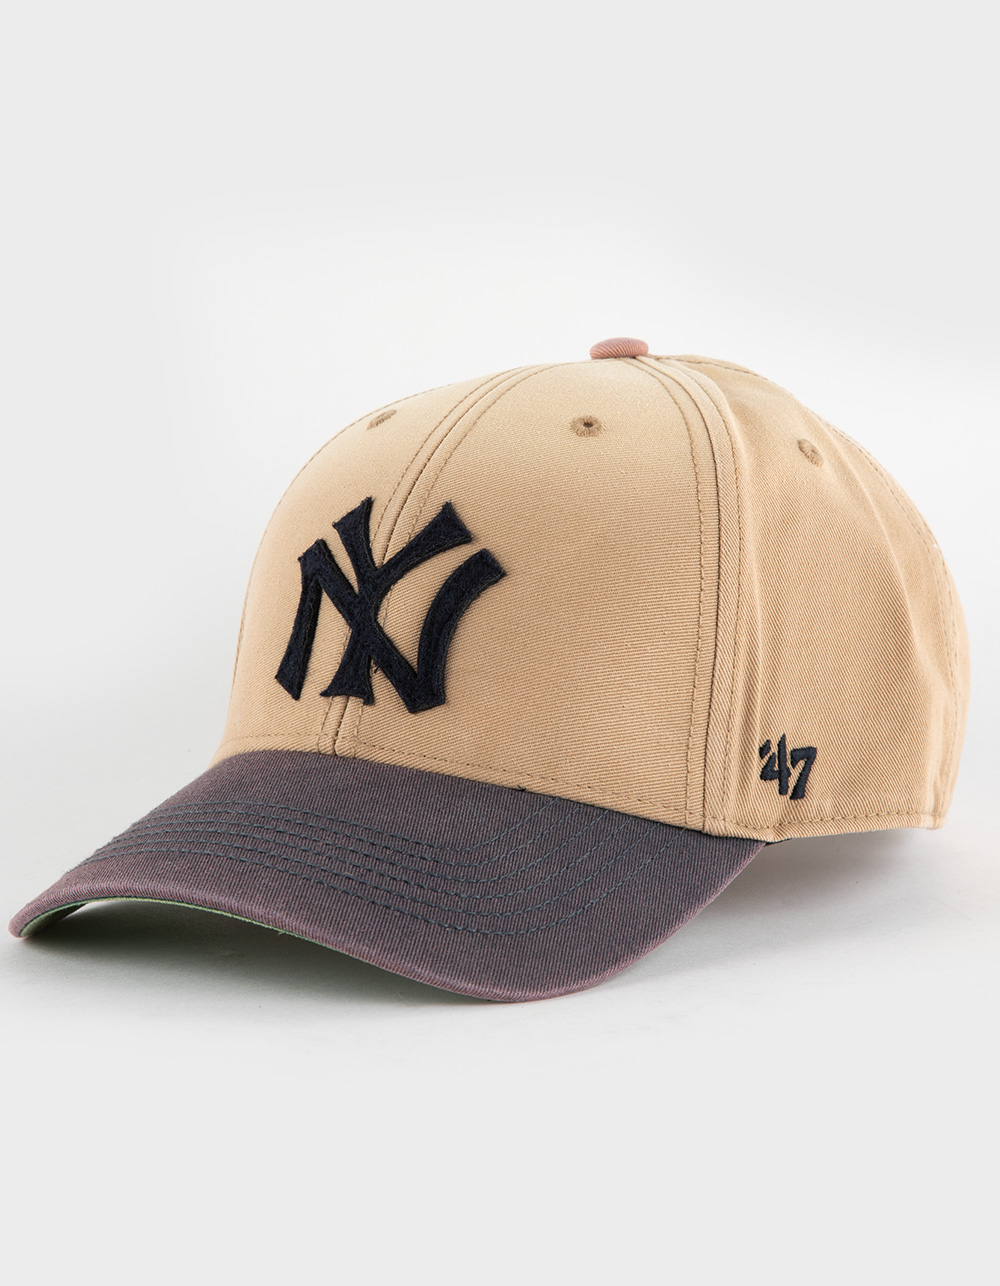 47 BRAND New York Yankees Cooperstown World Series Dusted Sedgwick '47 MVP Strapback Hat